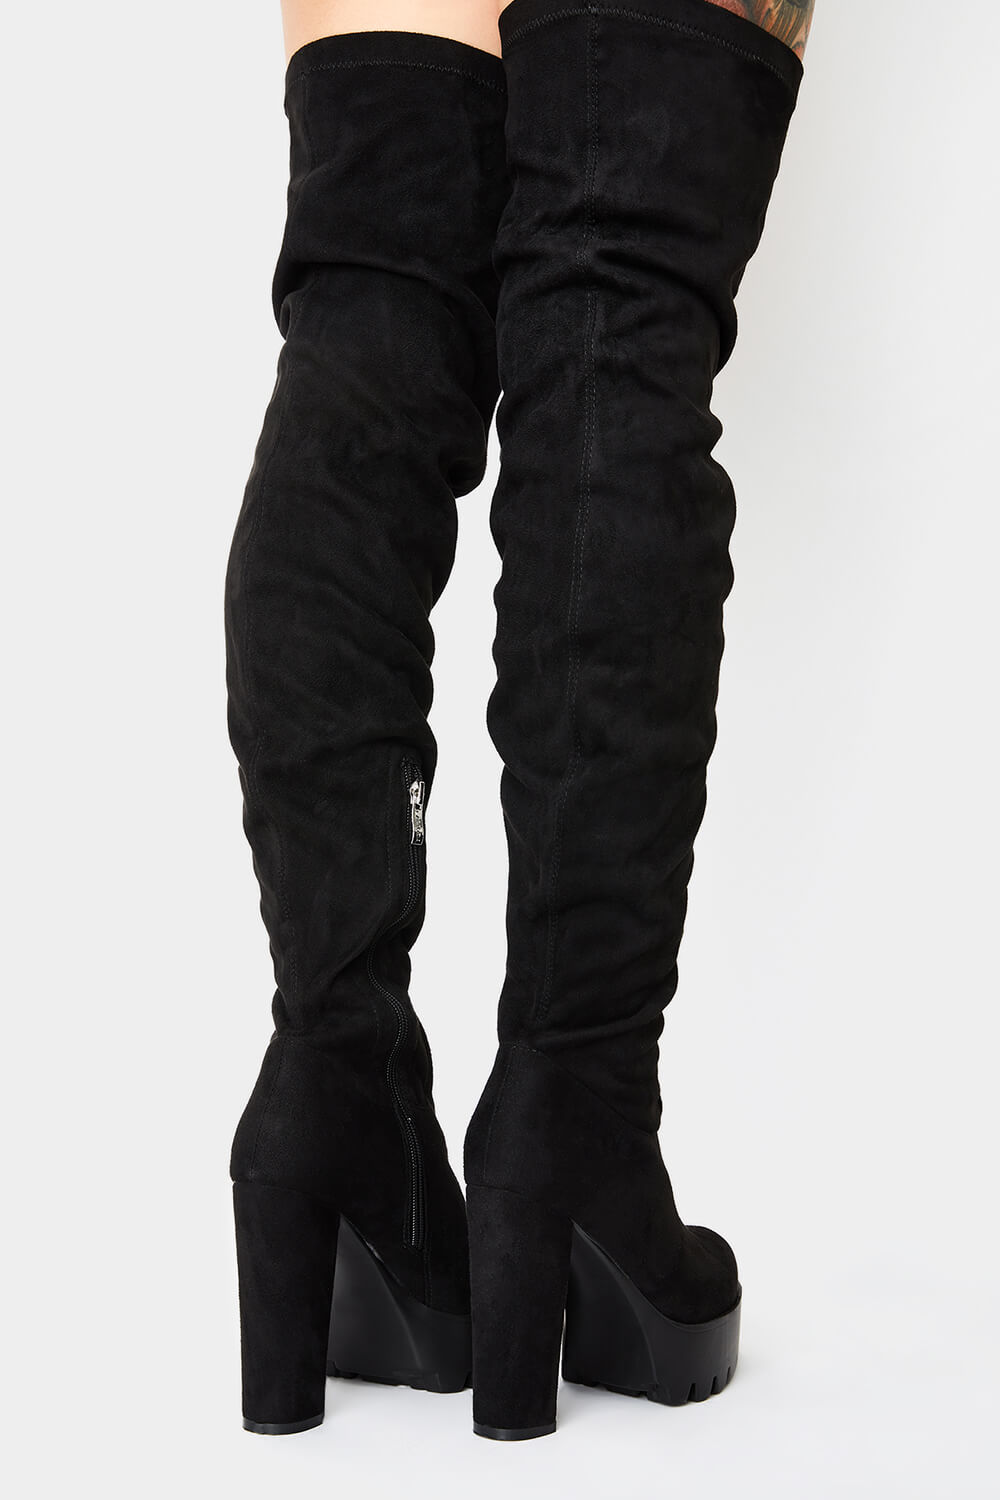 Black Suede Chunky Platform Block Heel Thigh High Boots